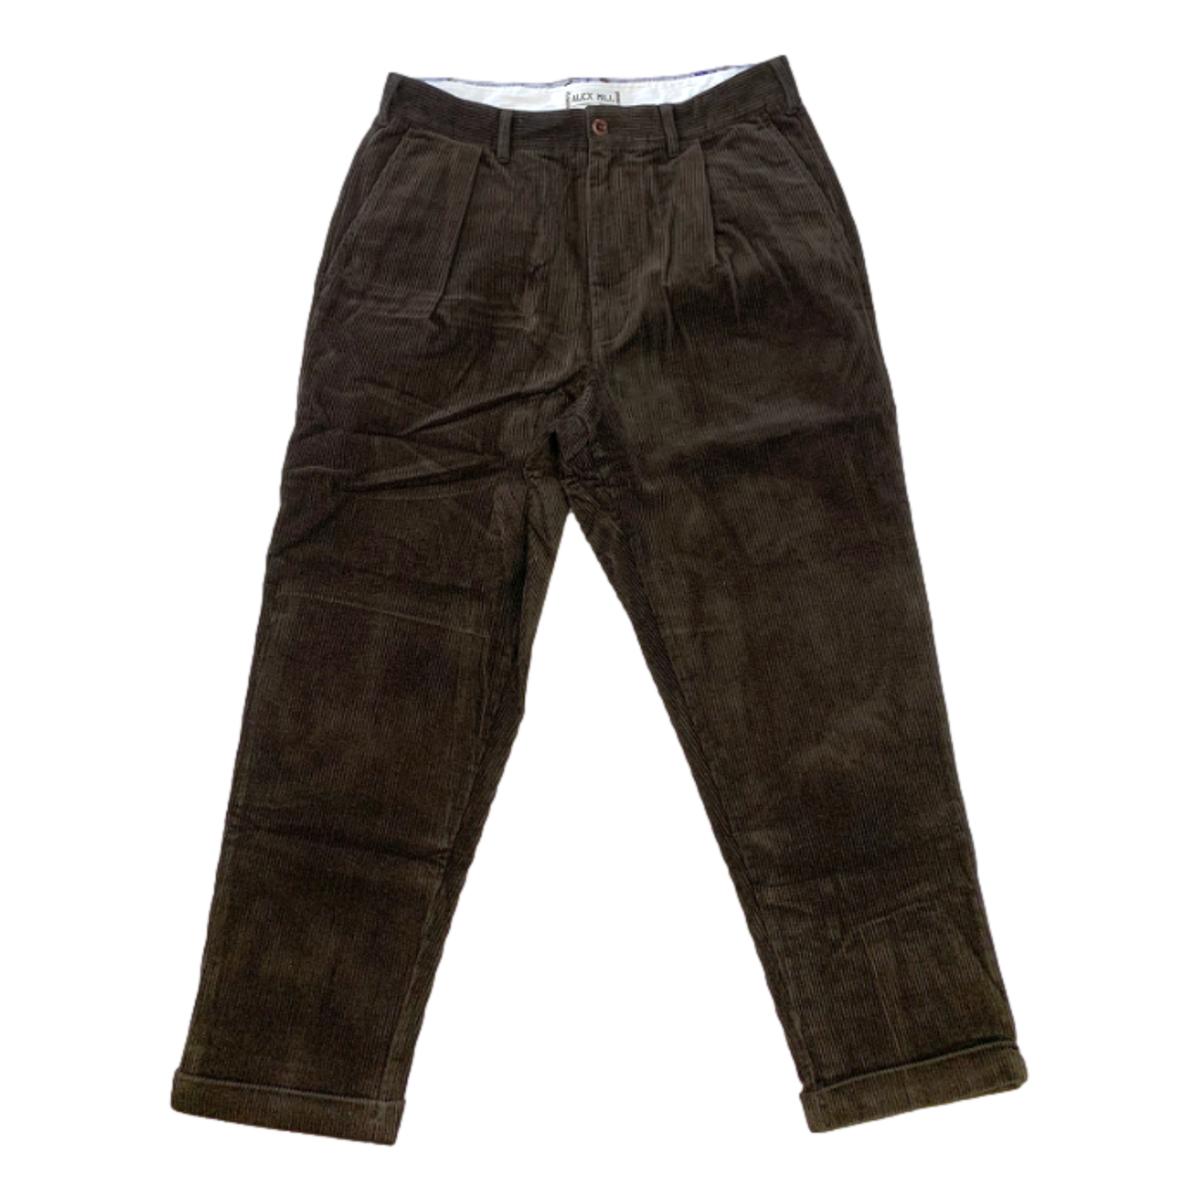 Pleated Pant Rugged Corduroy Chocolate - Pants